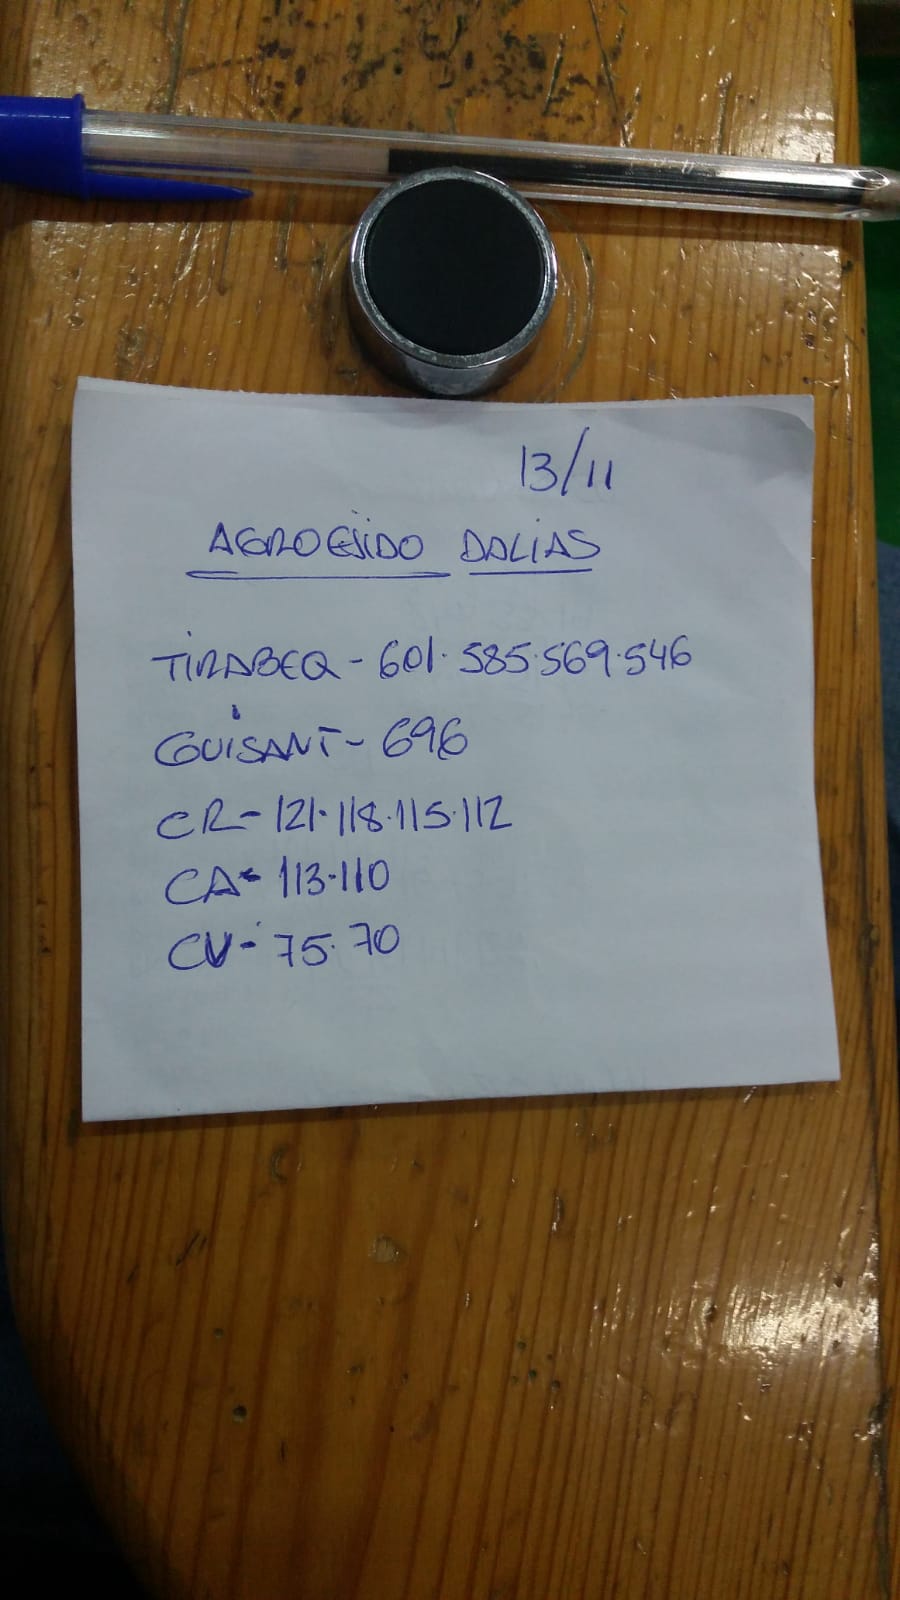 Subasta hortofrutícola AgroEjido Dalias 13 de Noviembre